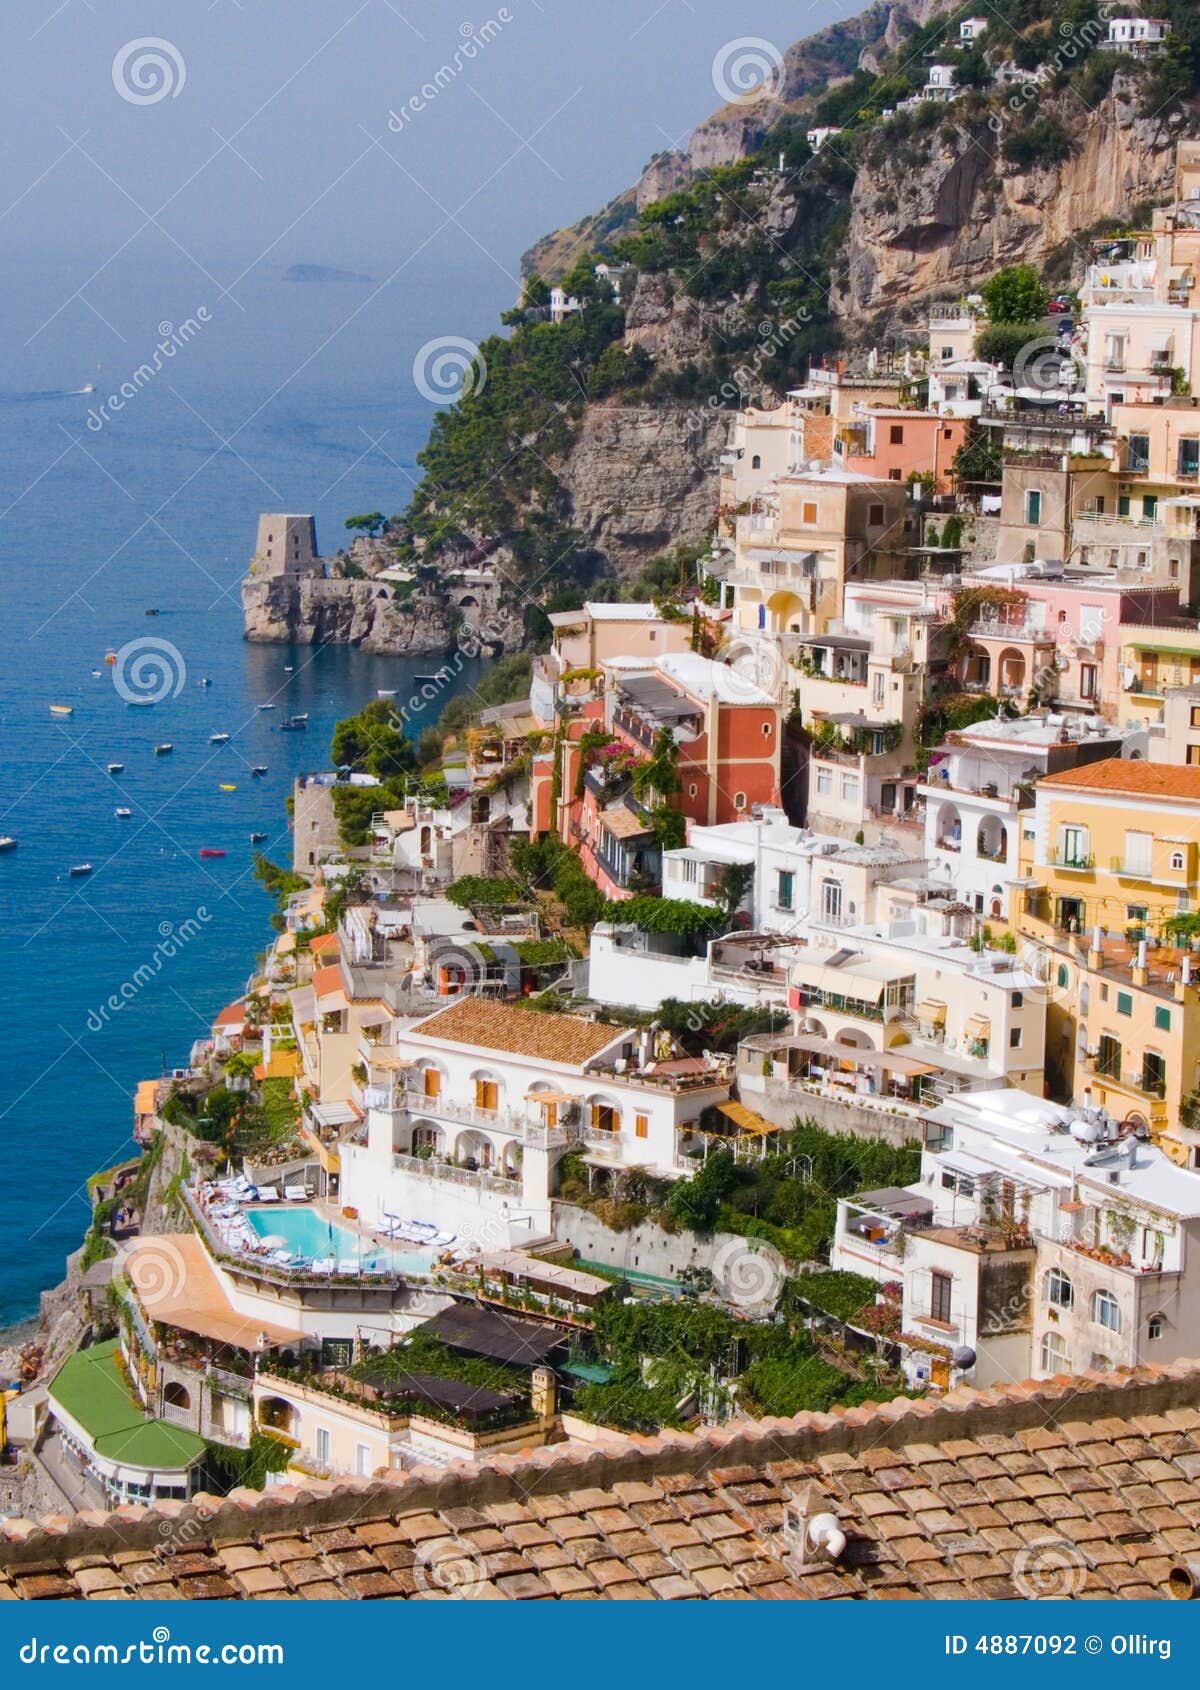 The village of Positano stock photo. Image of architecture - 4887092